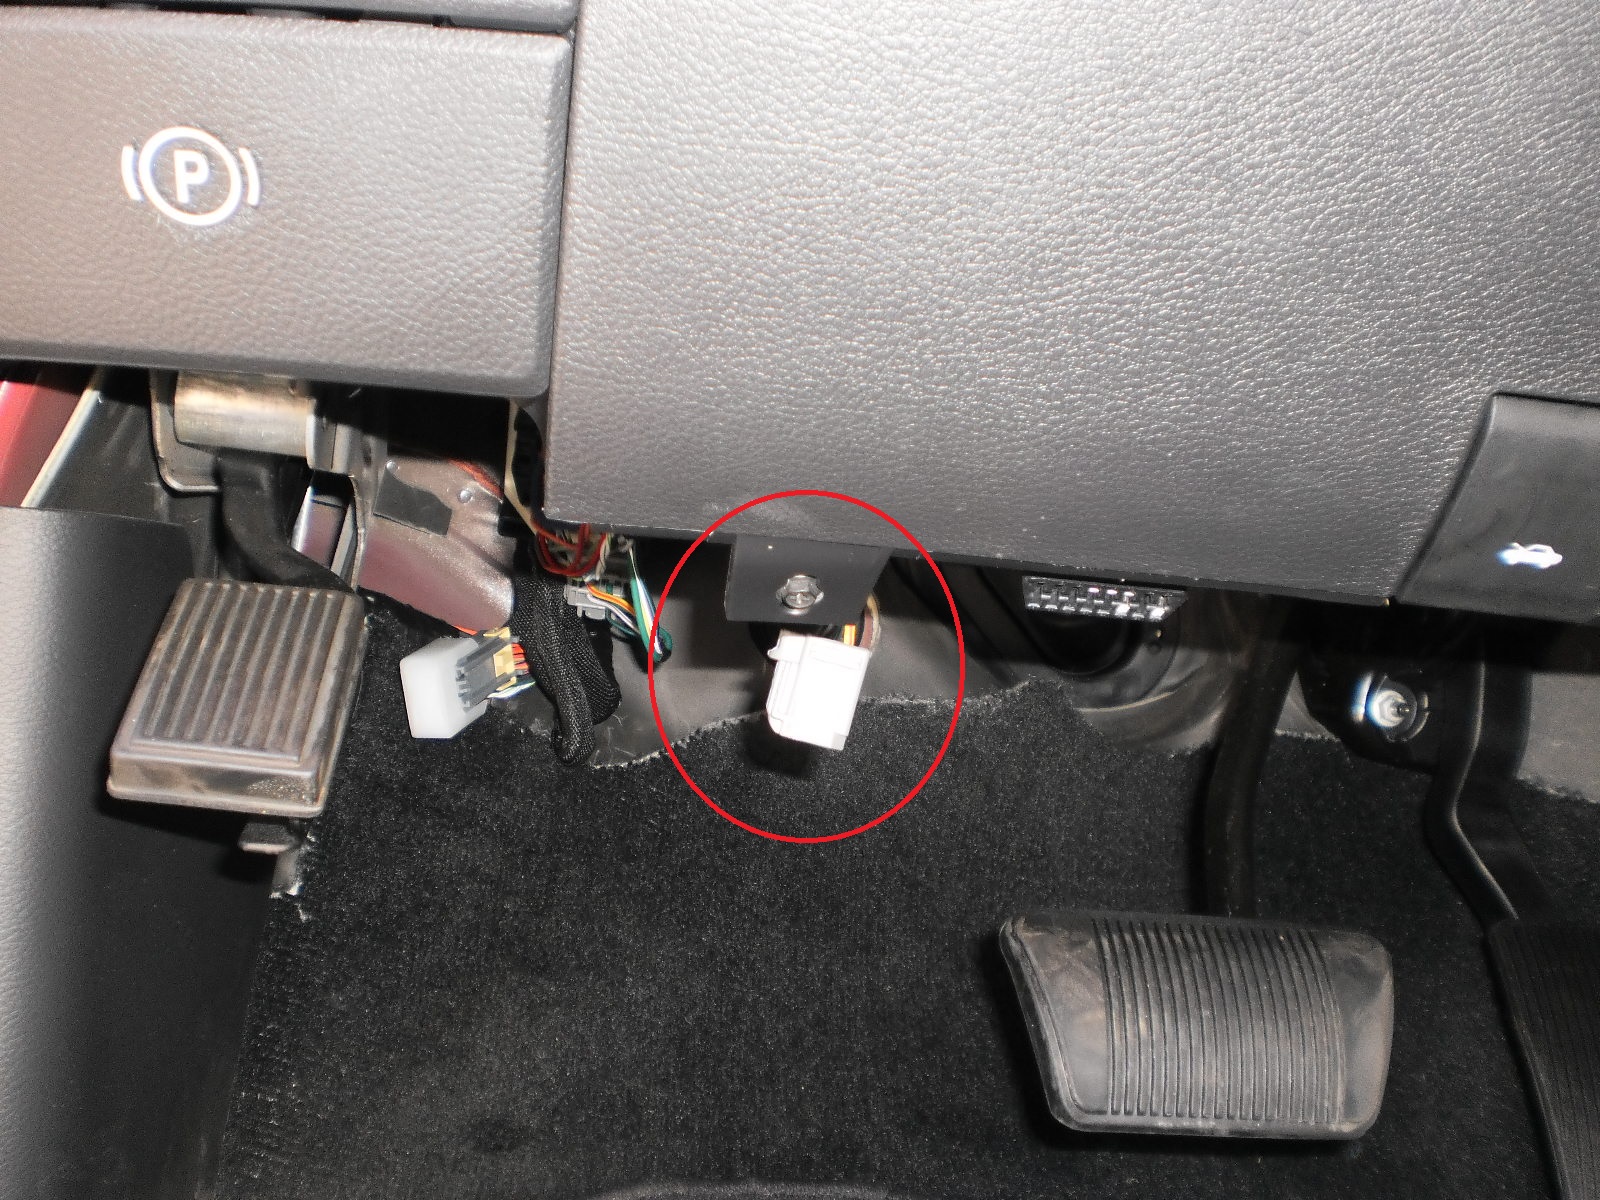 2012 Dodge Ram Truck Brake Controller Installation Instructions 2012 Ram Trailer Brake Controller Problems